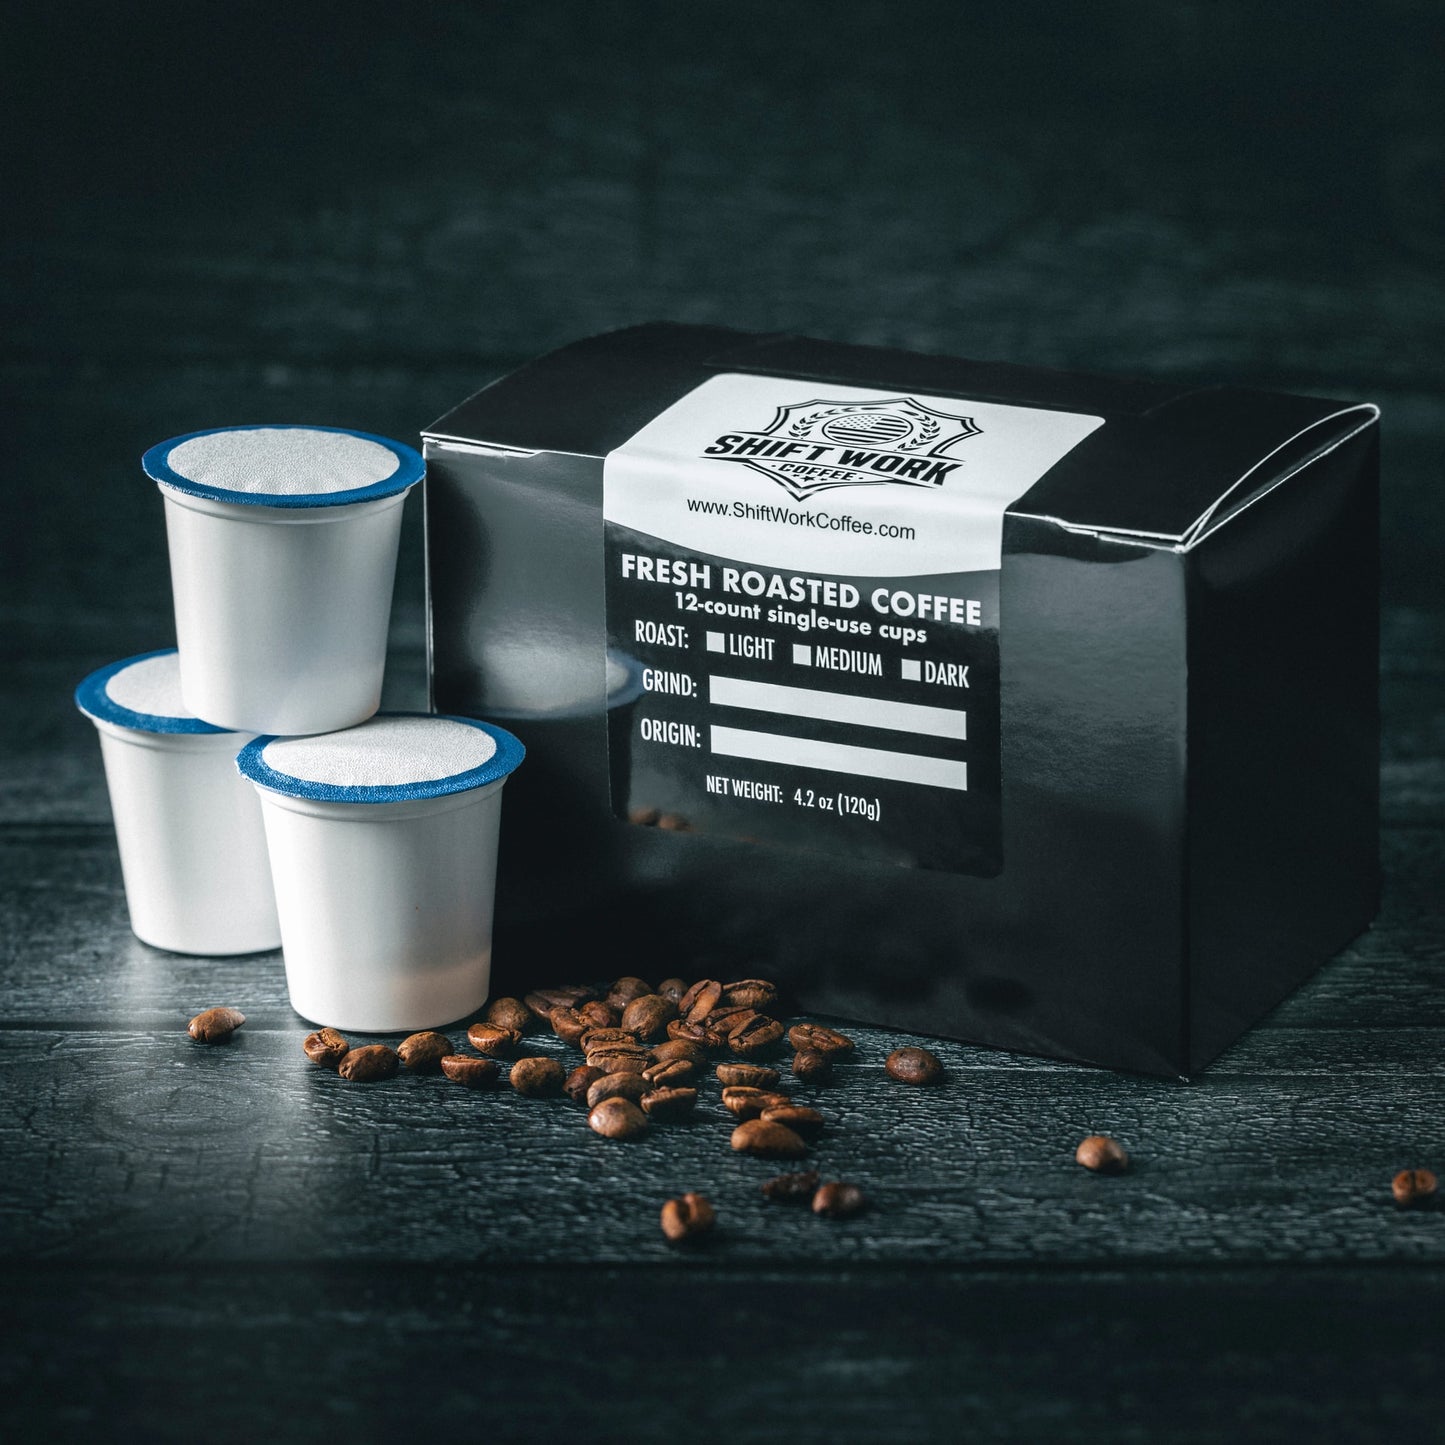 60 Pack Single Serve Coffee Pods